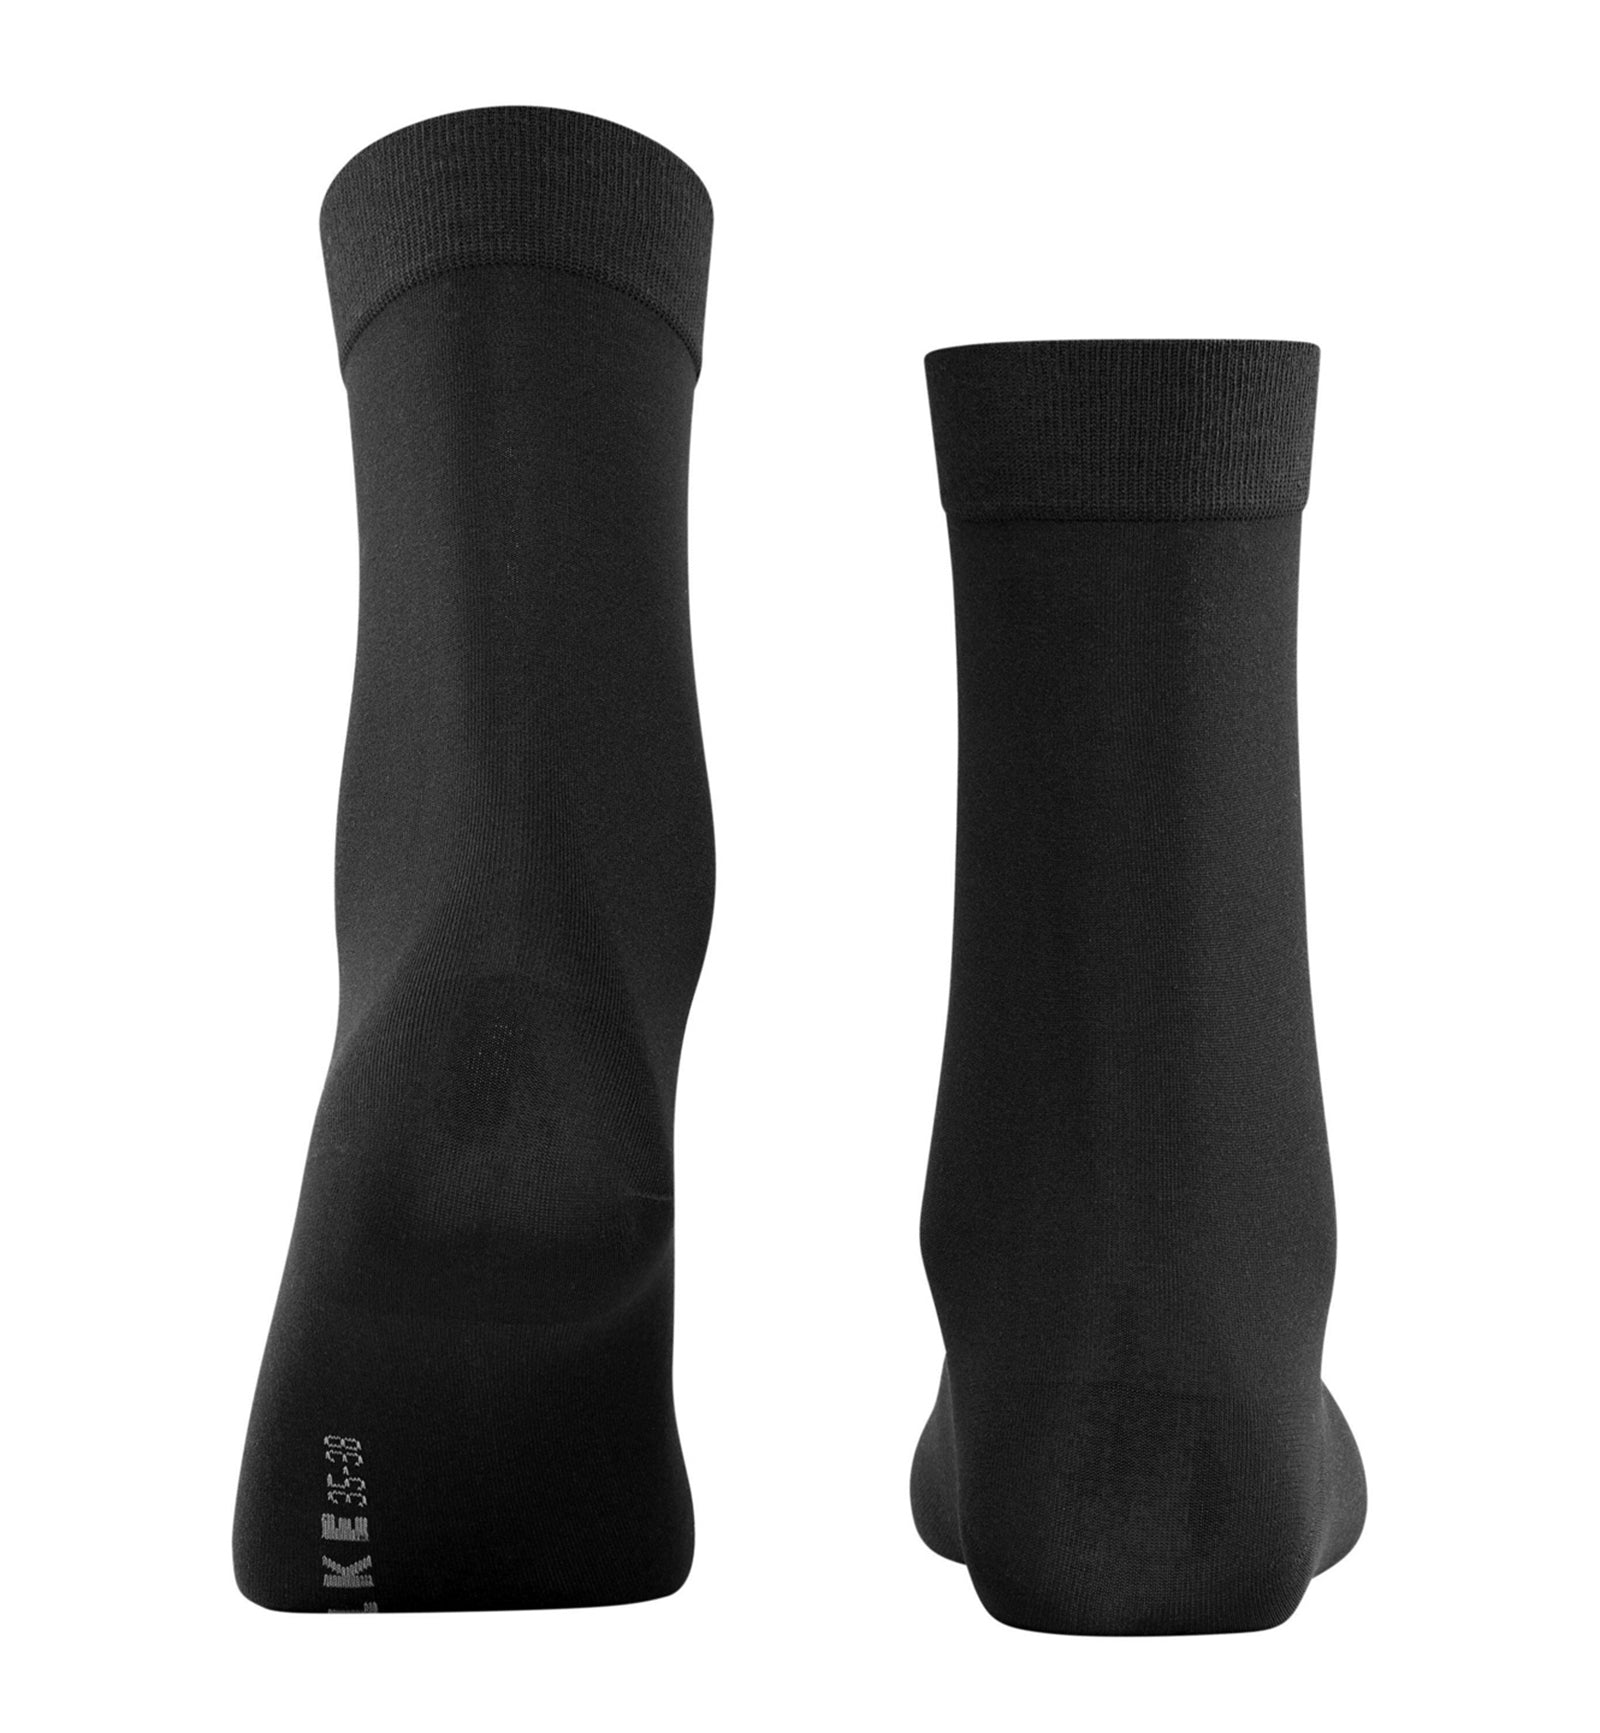 FALKE Cotton Touch Crew Socks (47105),5/7.5,Black - Black,5/7.5